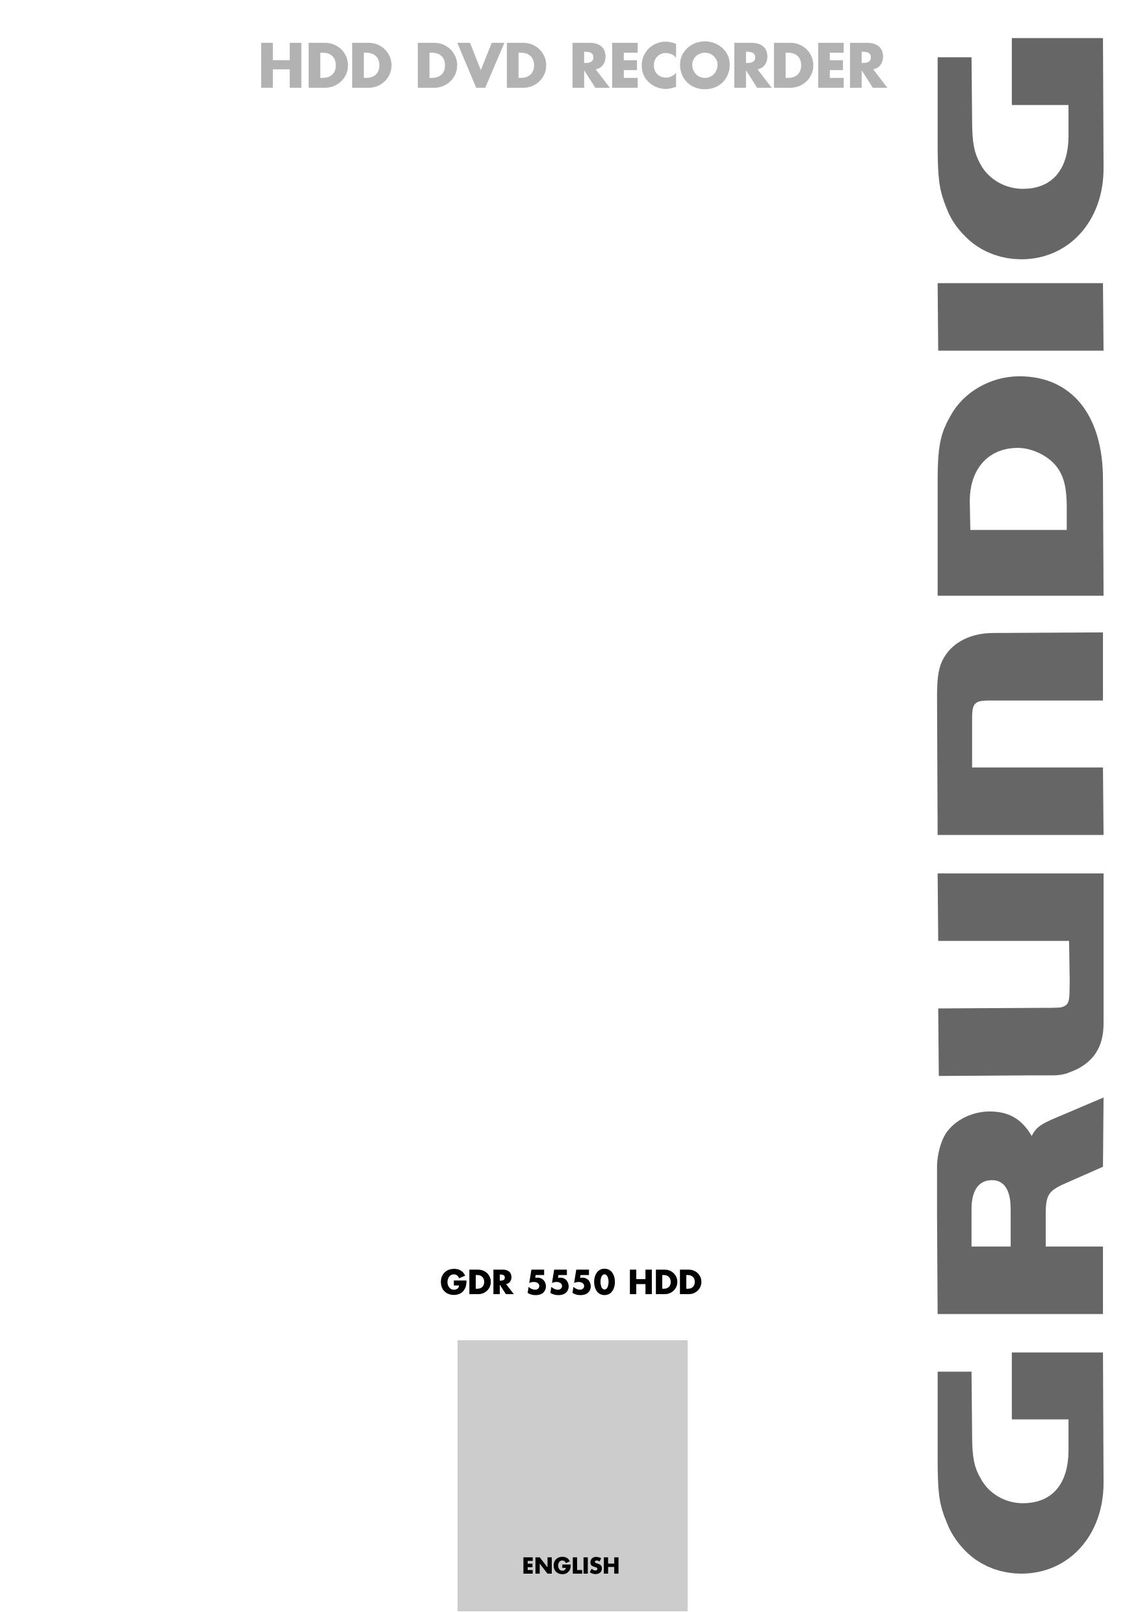 Grundig 5550 HDD DVR User Manual